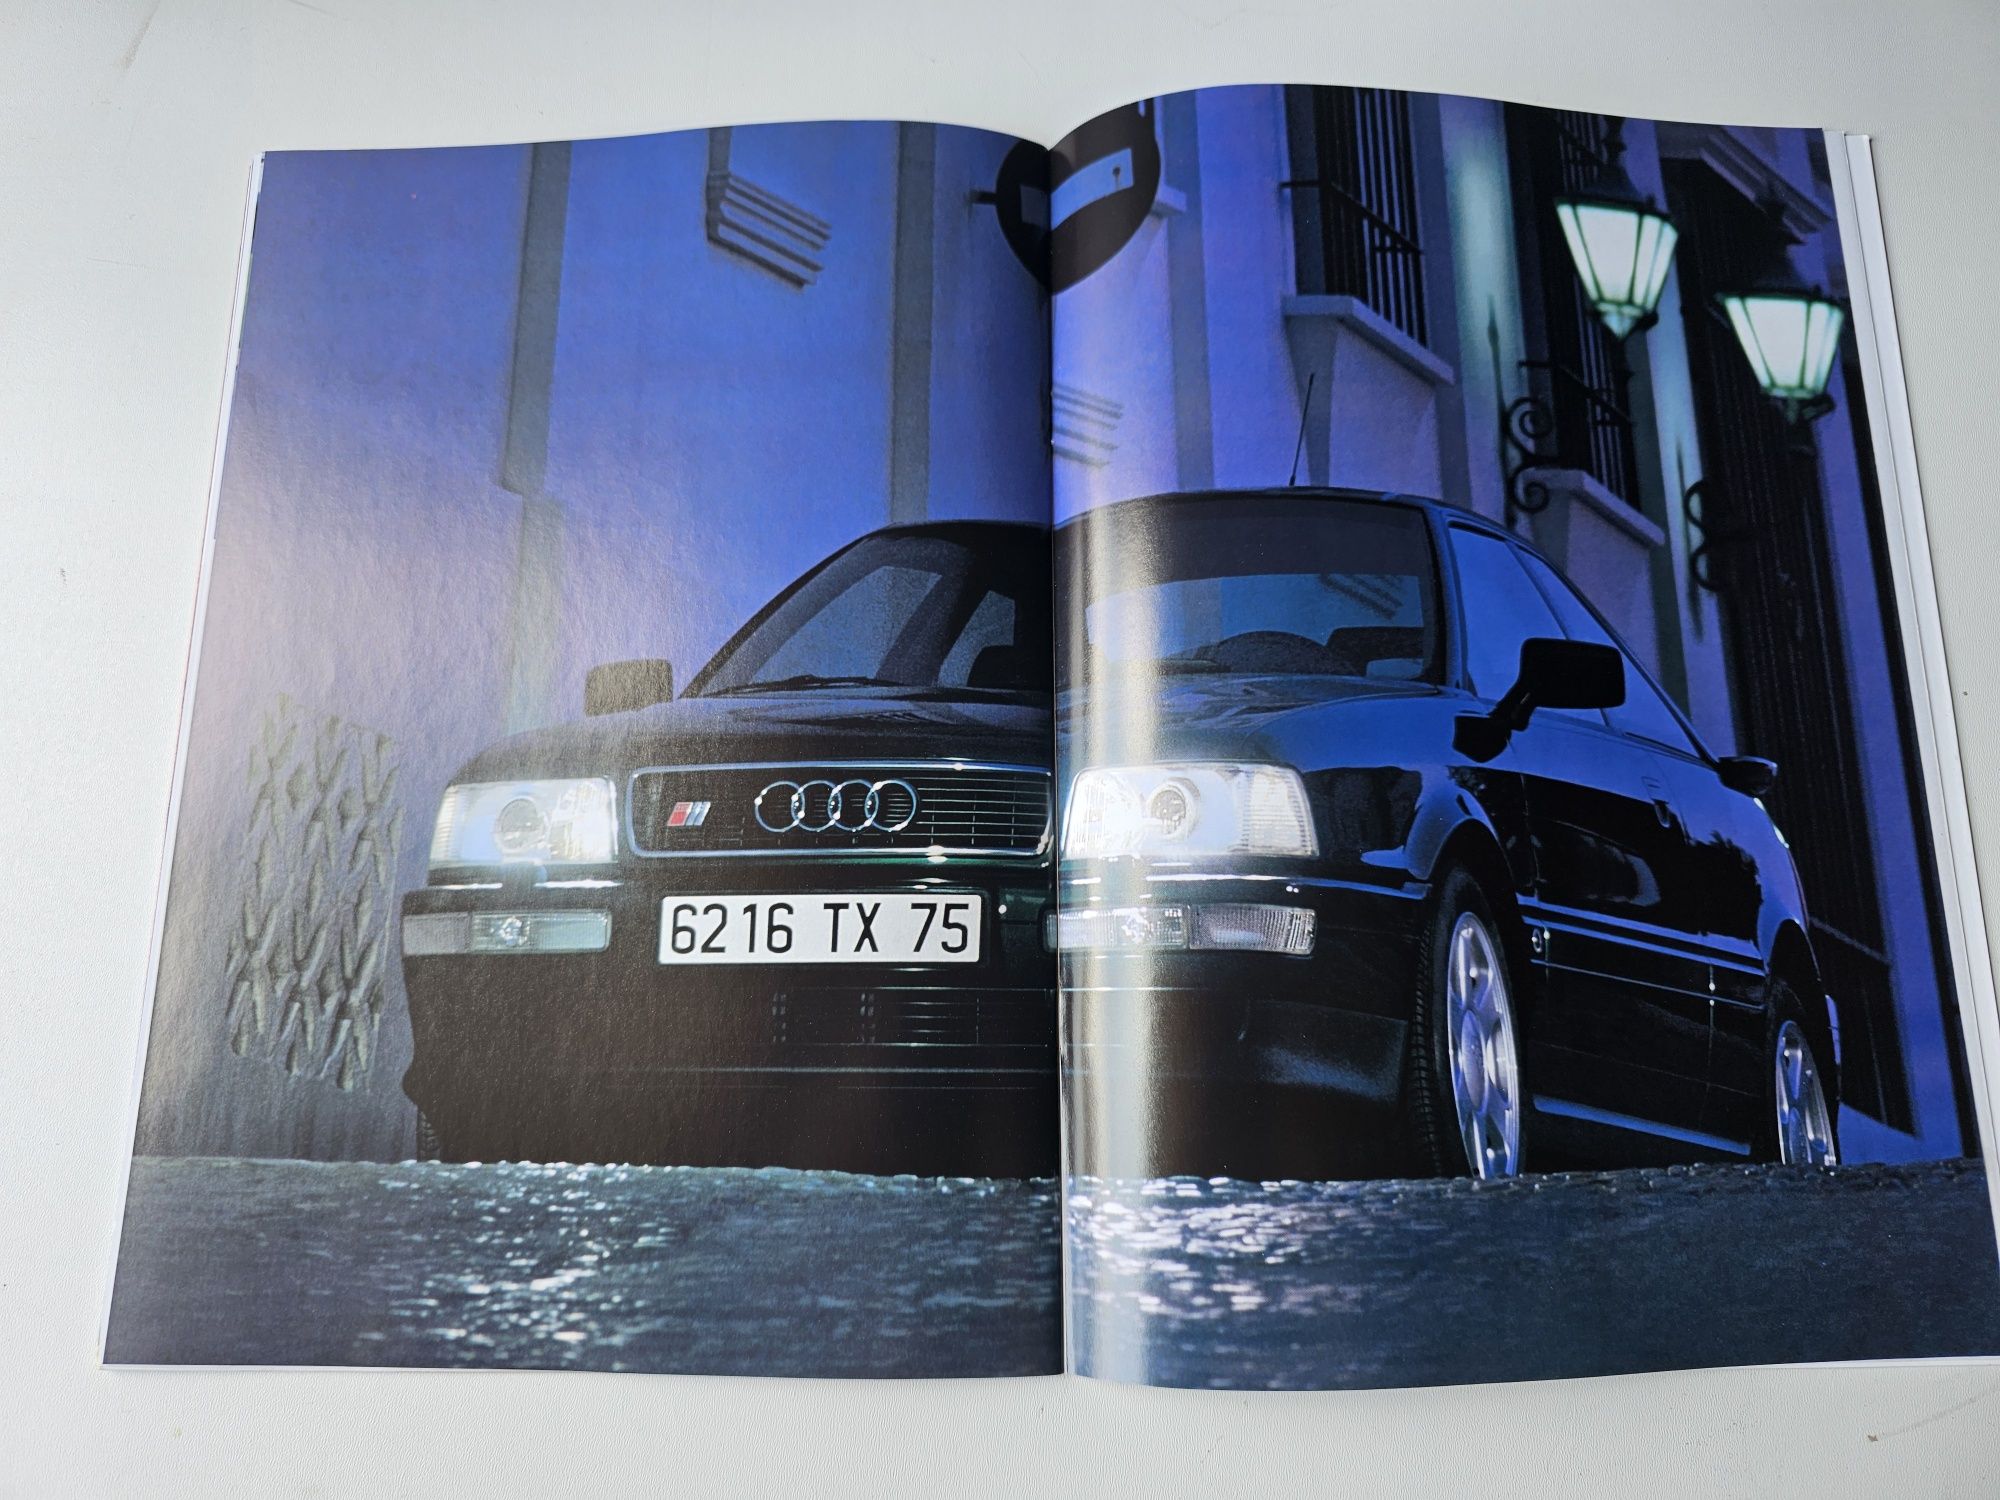 Brosura de prezentare originala Audi S2 (model rar)

Stare buna

Model